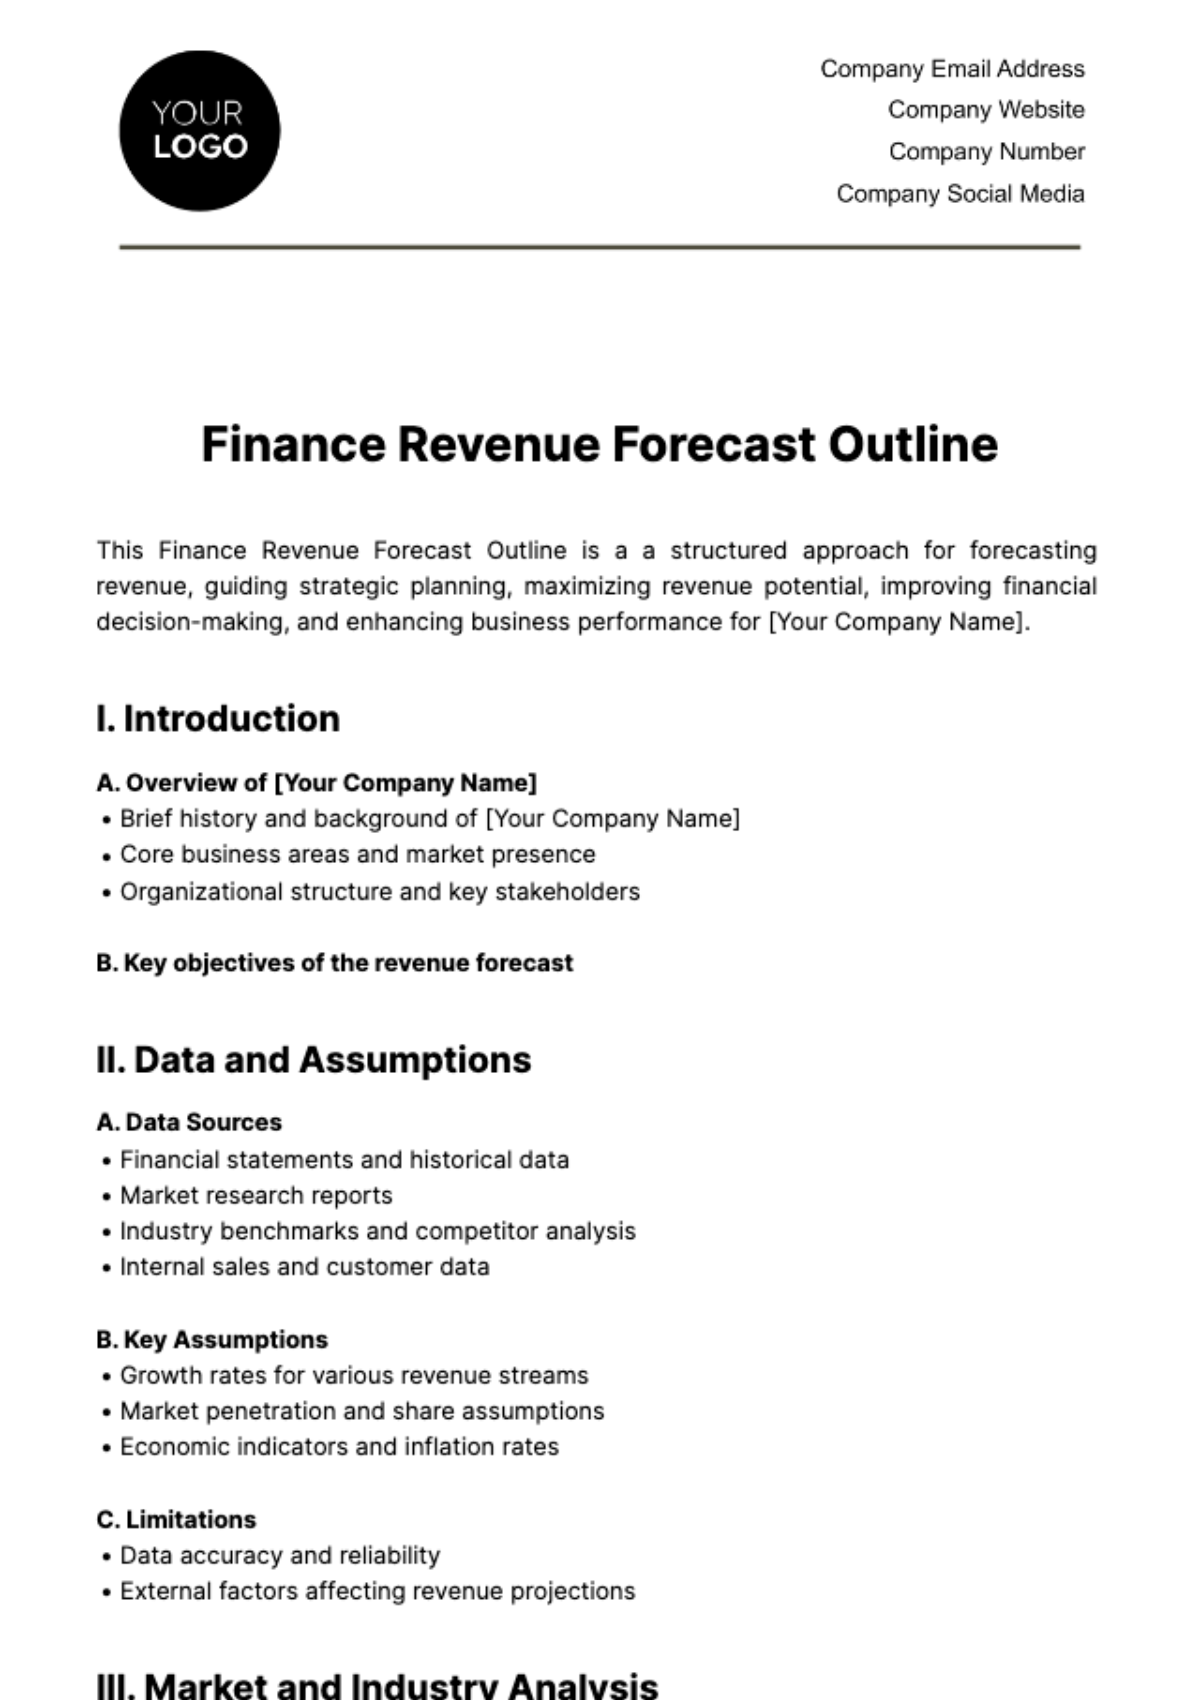 Finance Revenue Forecast Outline Template